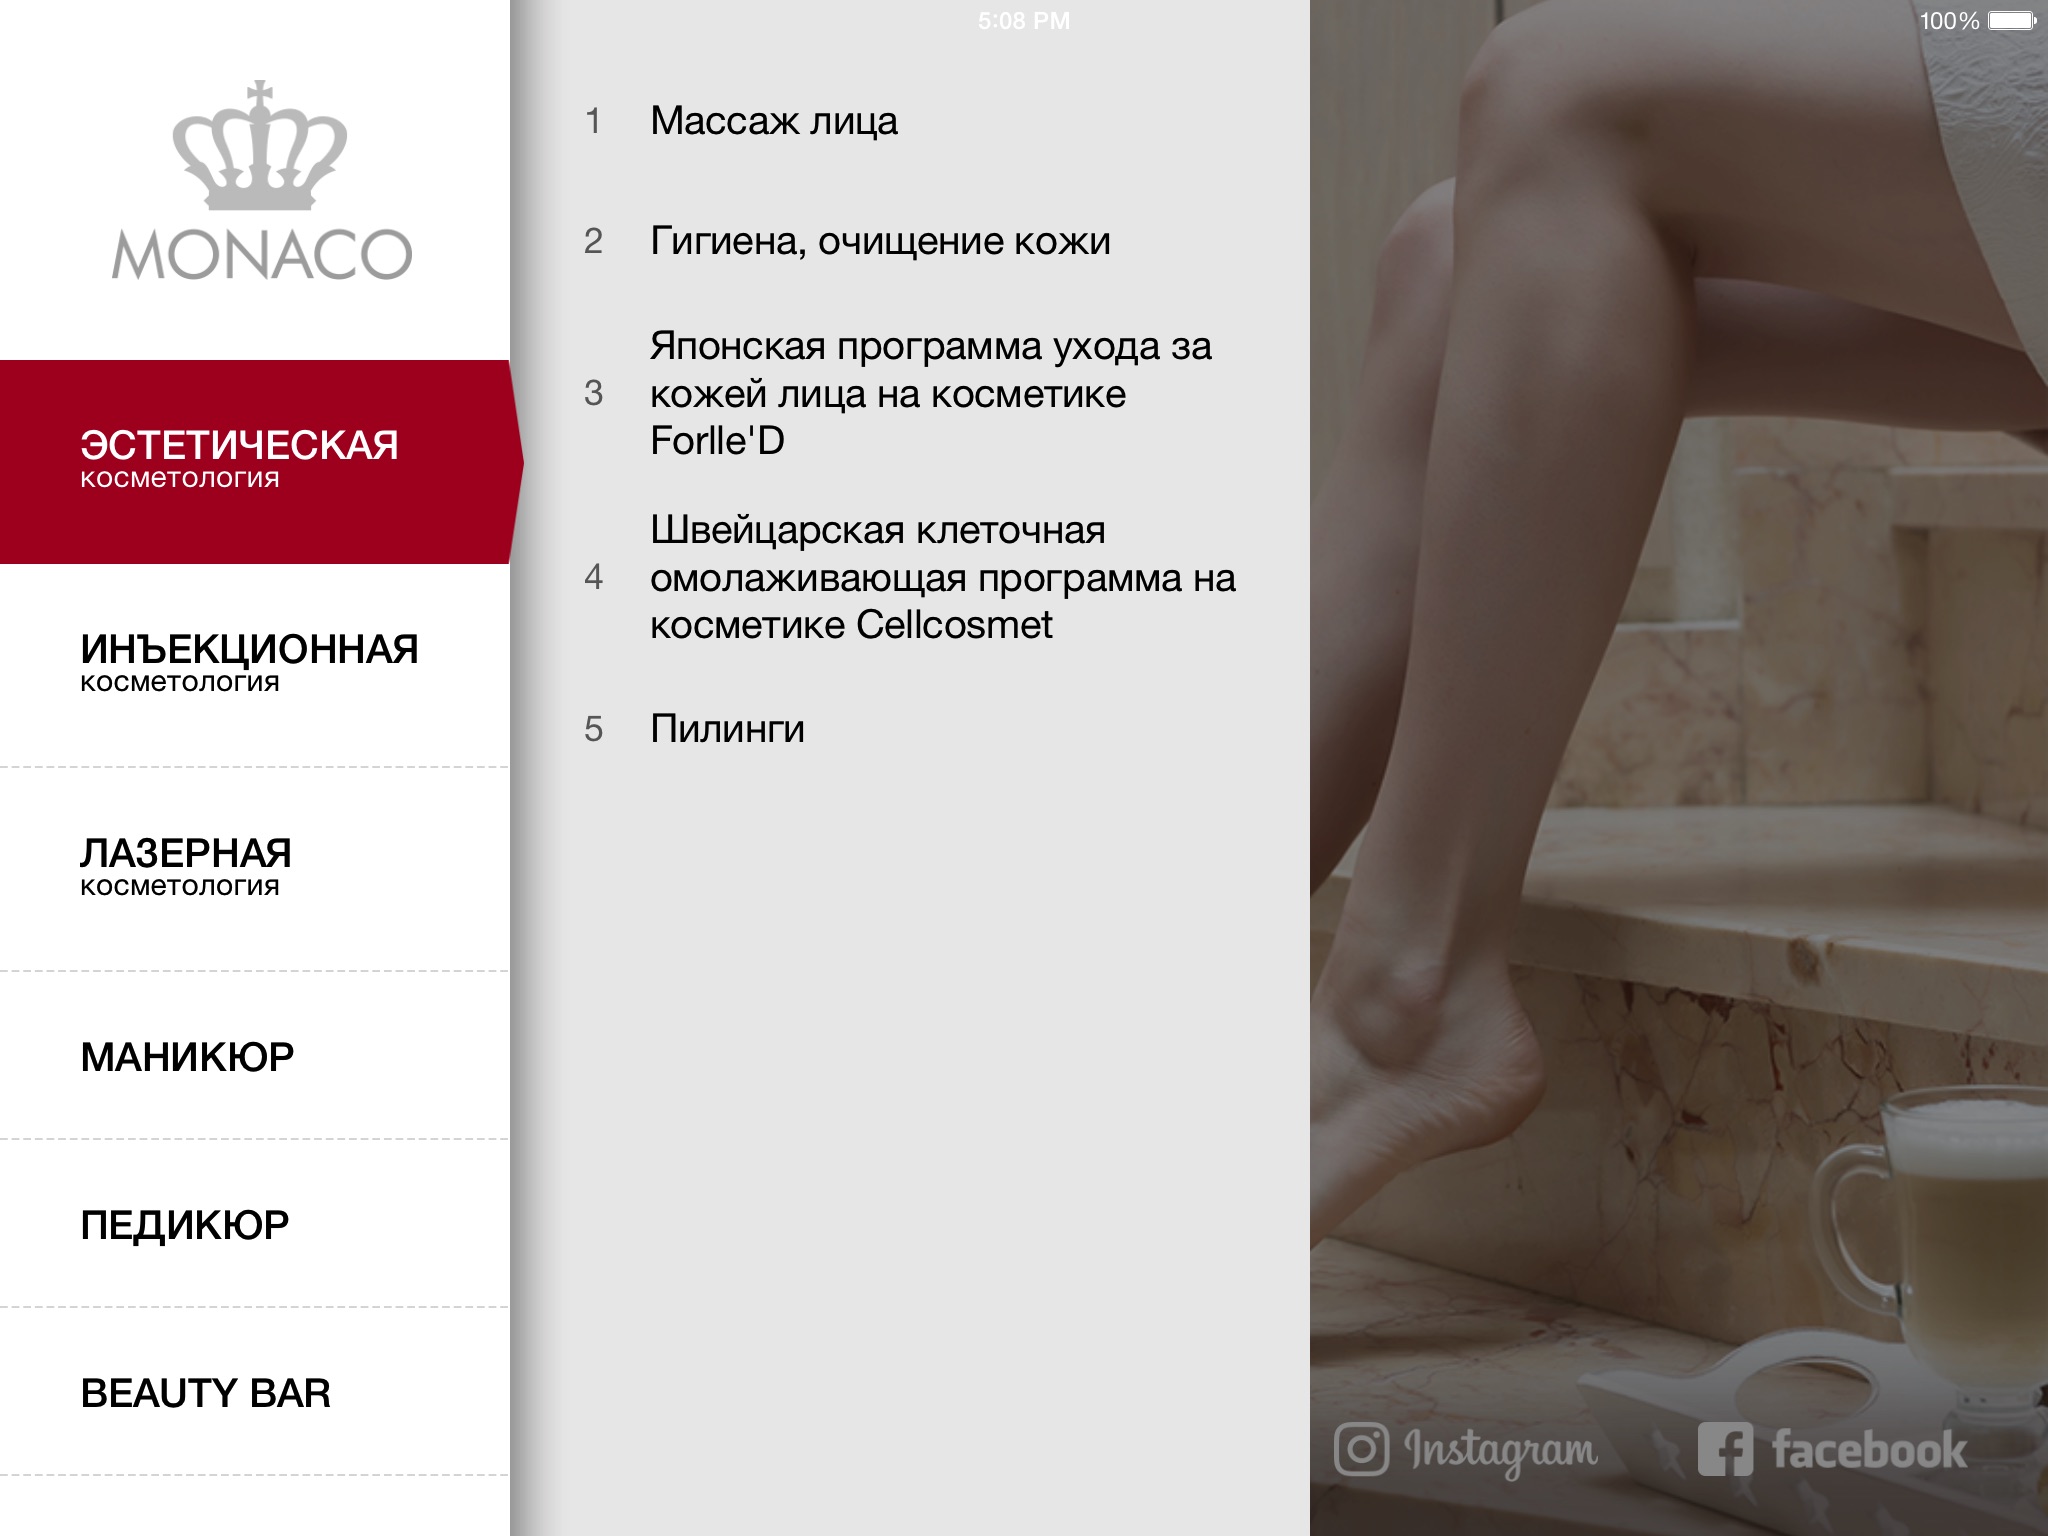 Monaco - каталог услуг screenshot 2